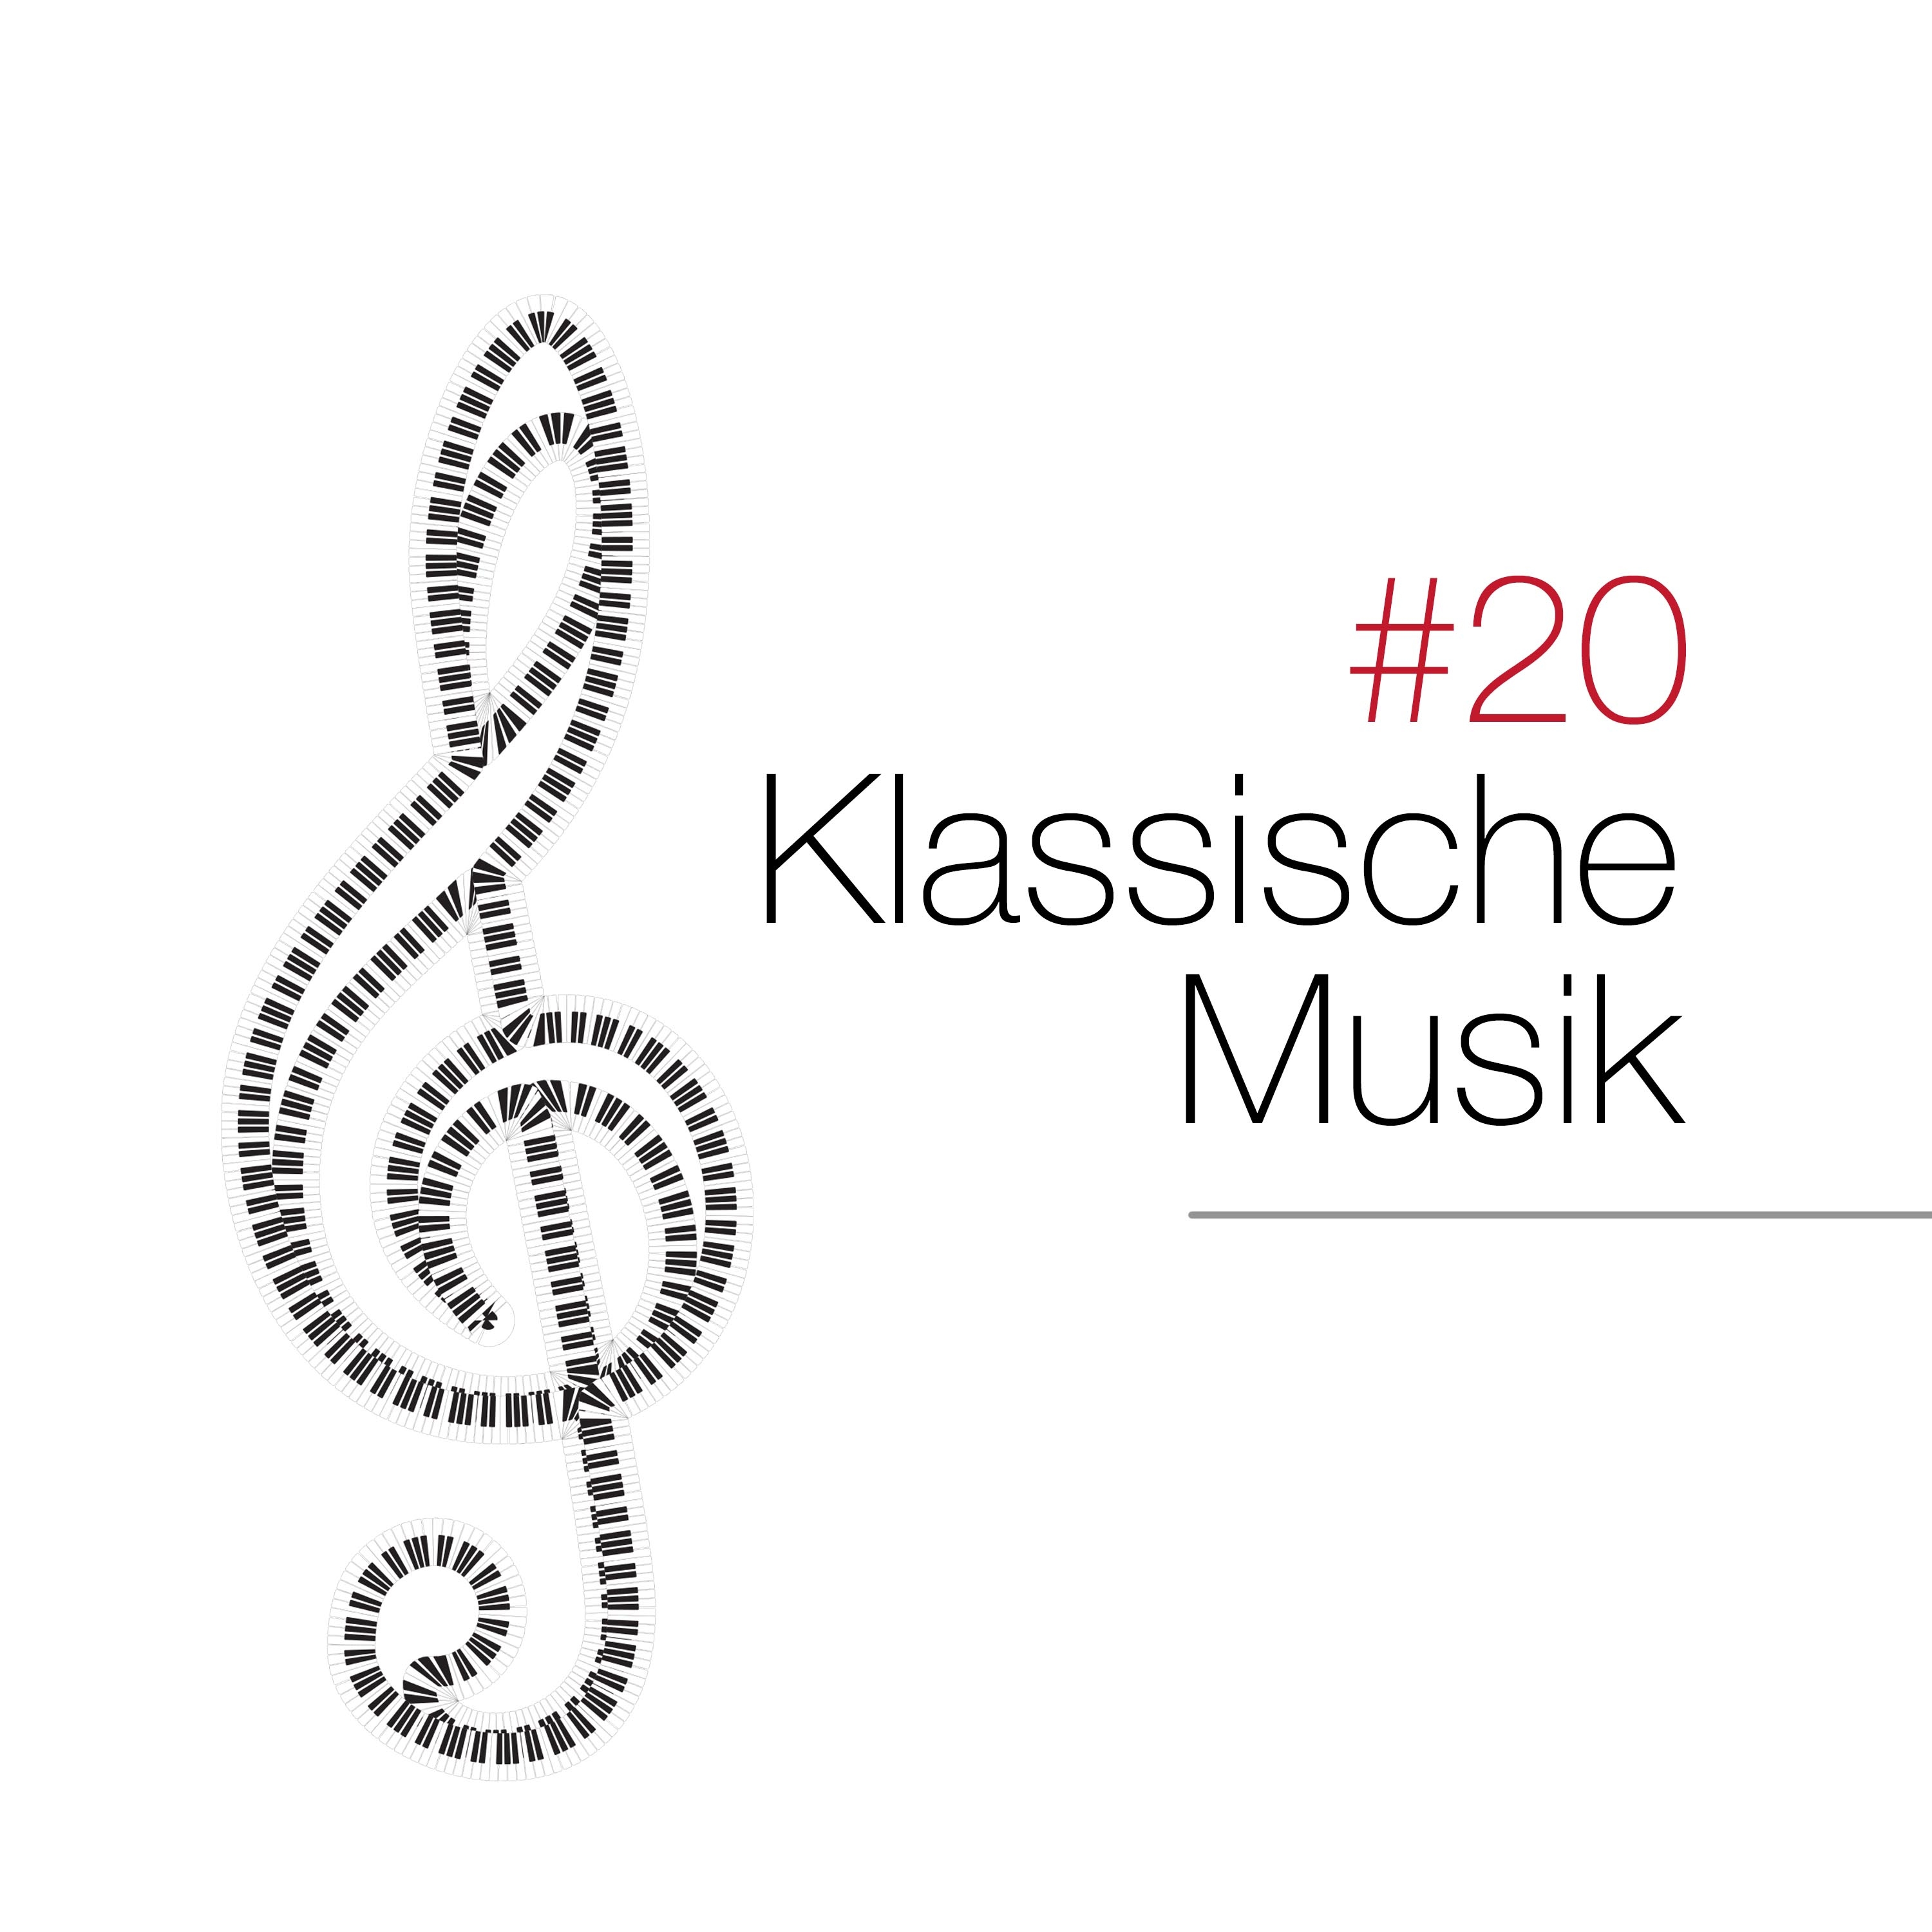 Mozart Piano Sonata No 16 C major K 545